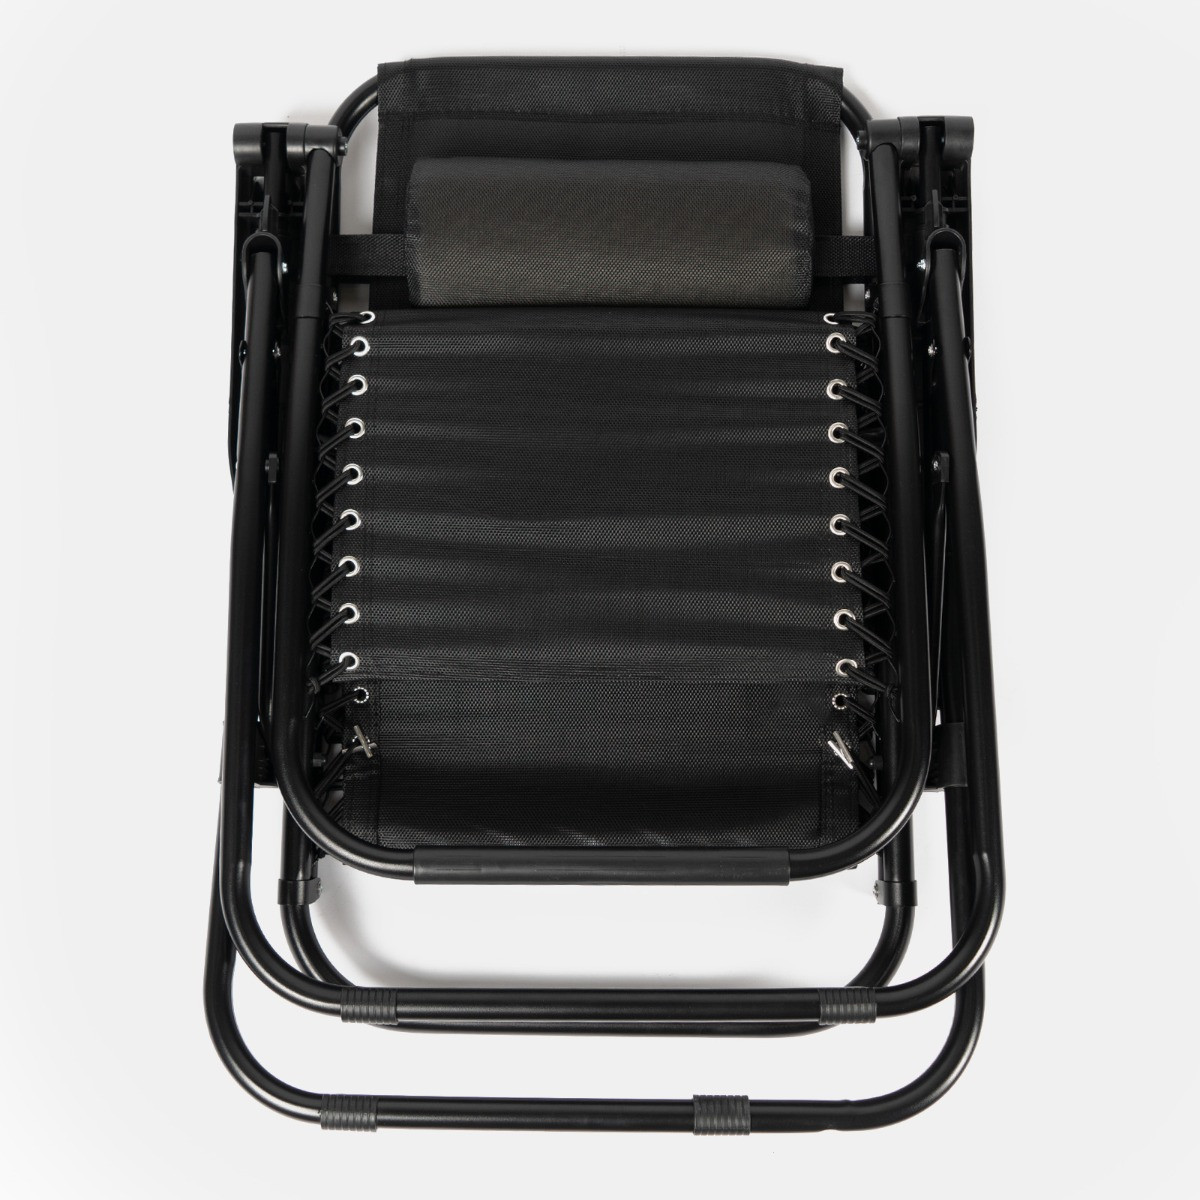 OHS Zero Gravity Sun Lounging Garden Chair - Black>